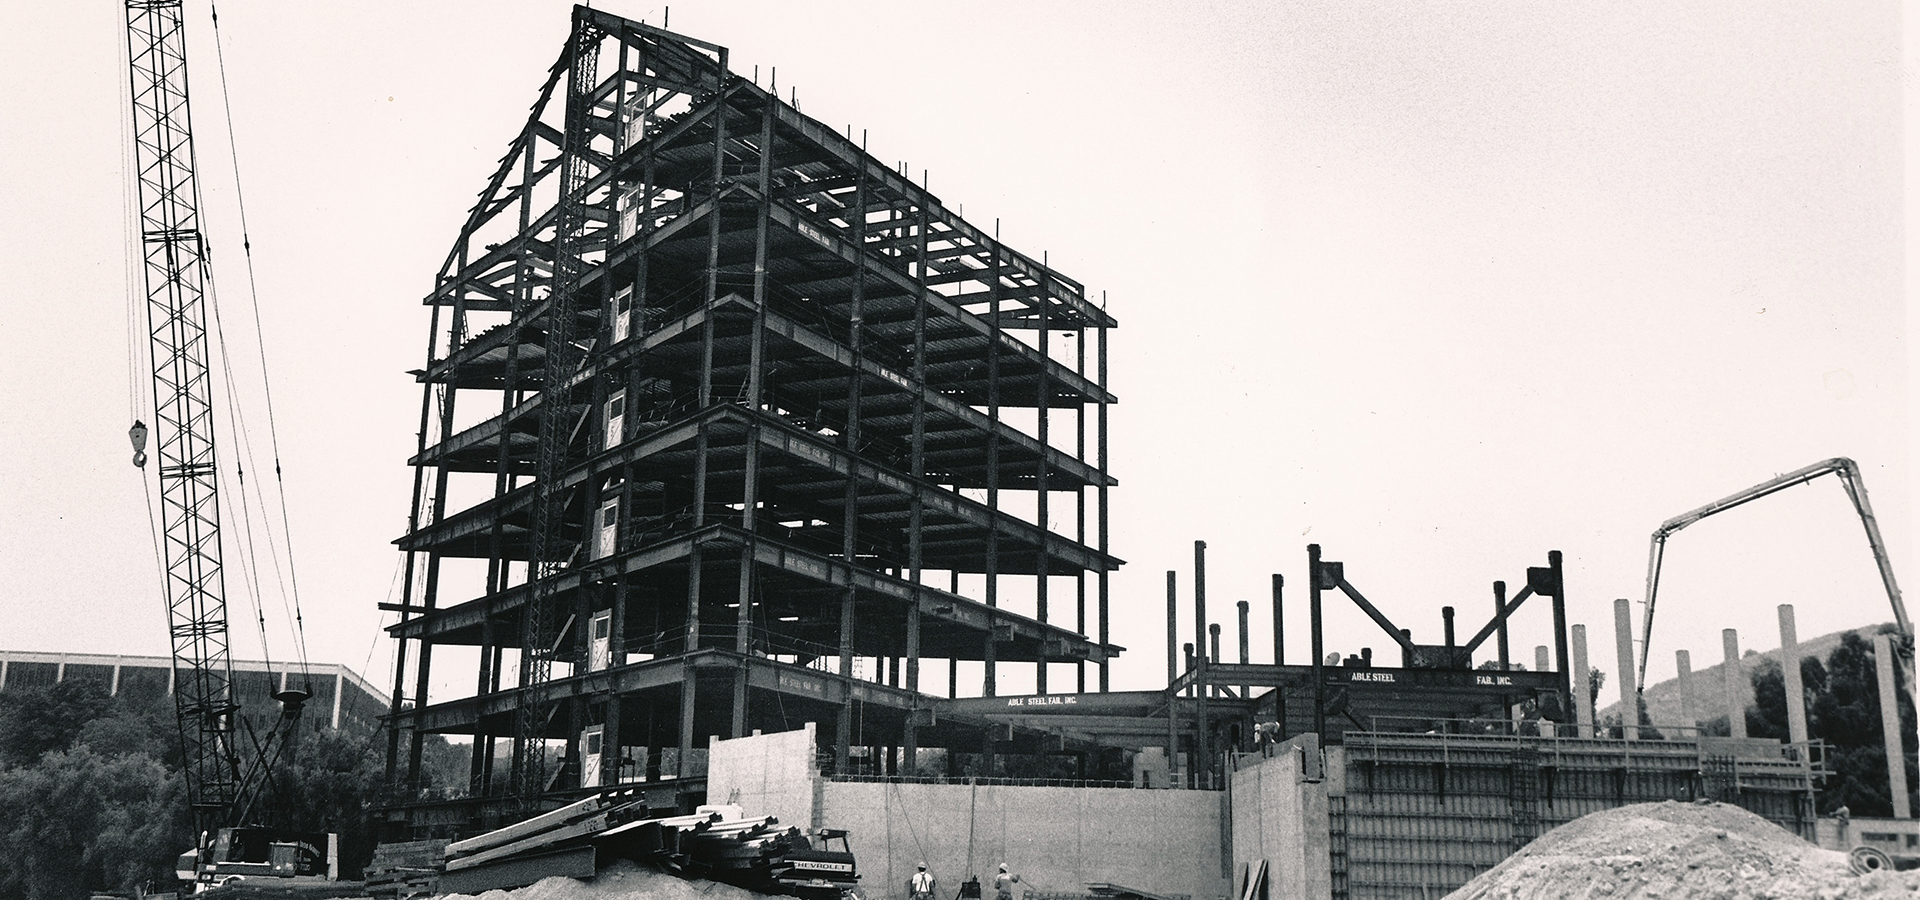 CLA under construction in 1991